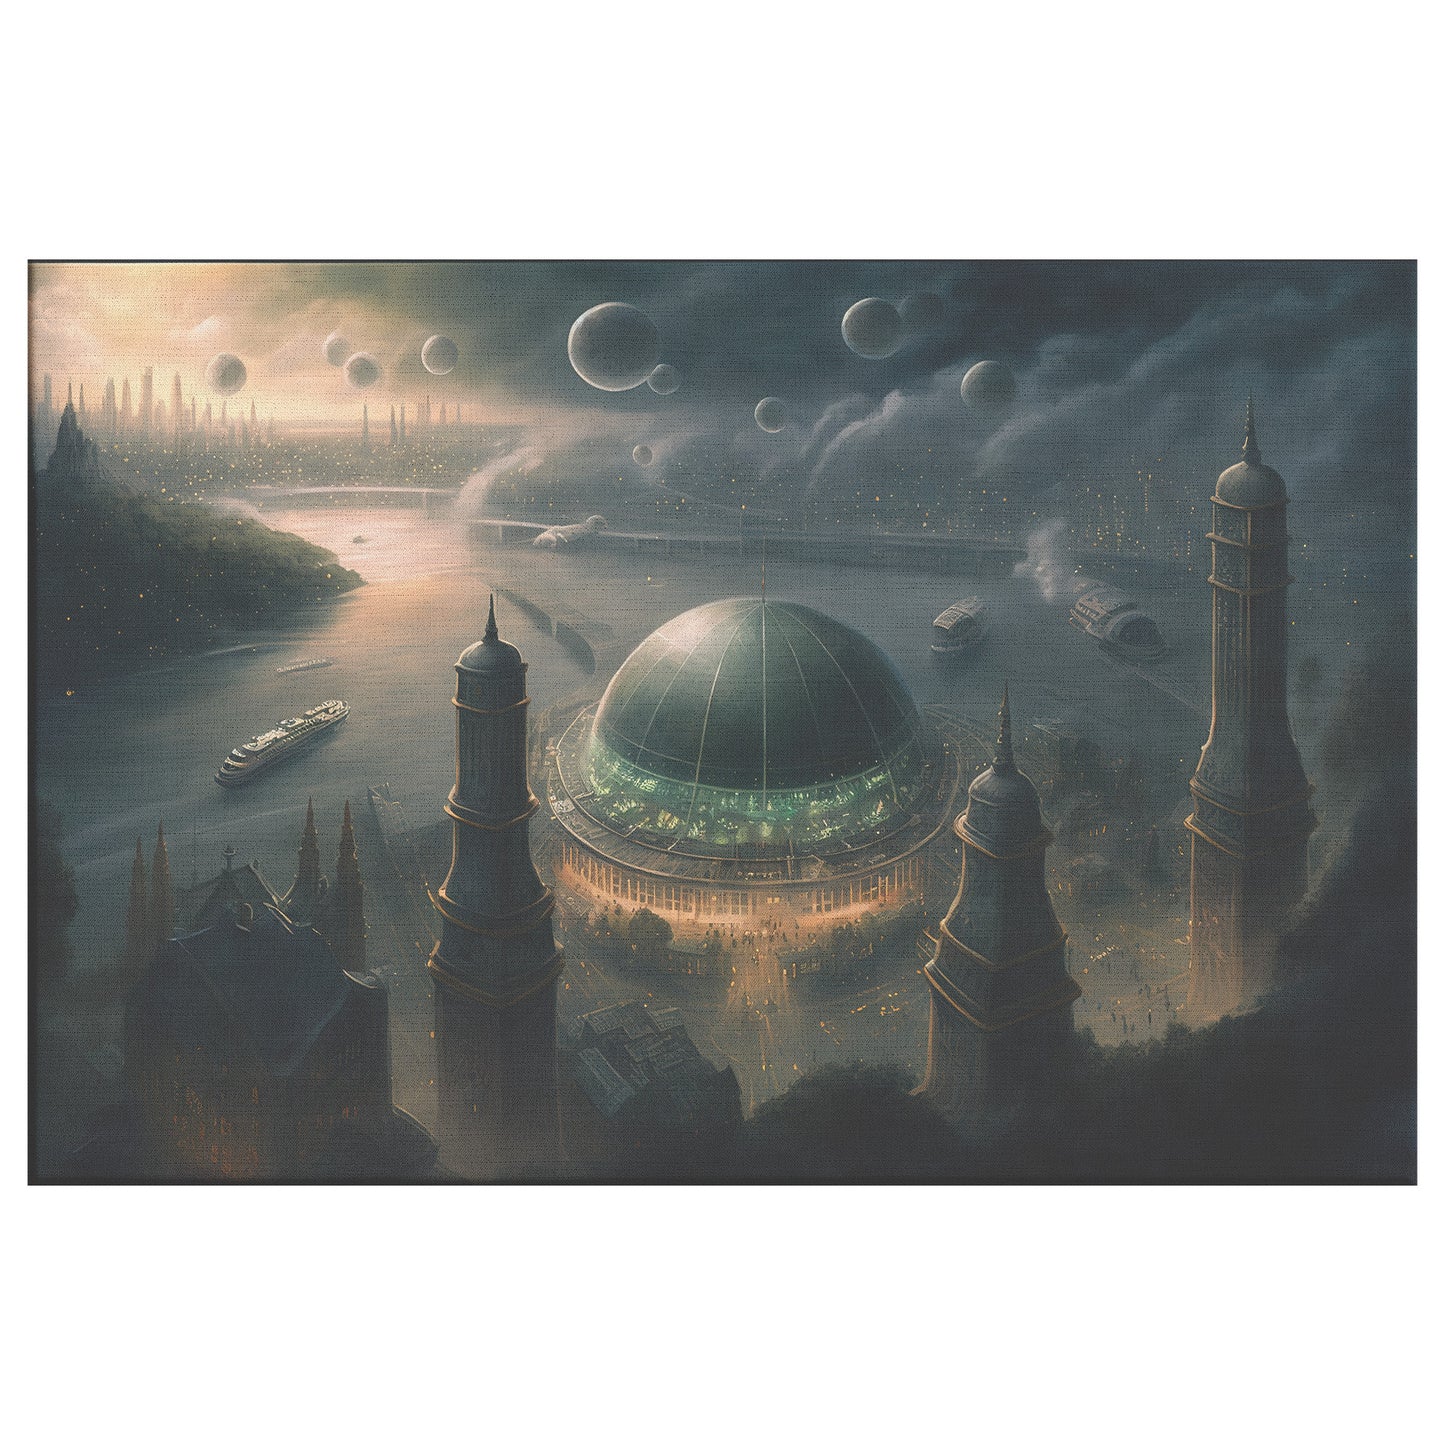 Sci Fi Space Byzantine Cityscape, Mysterious Fantasy City, Midjourney AI Art